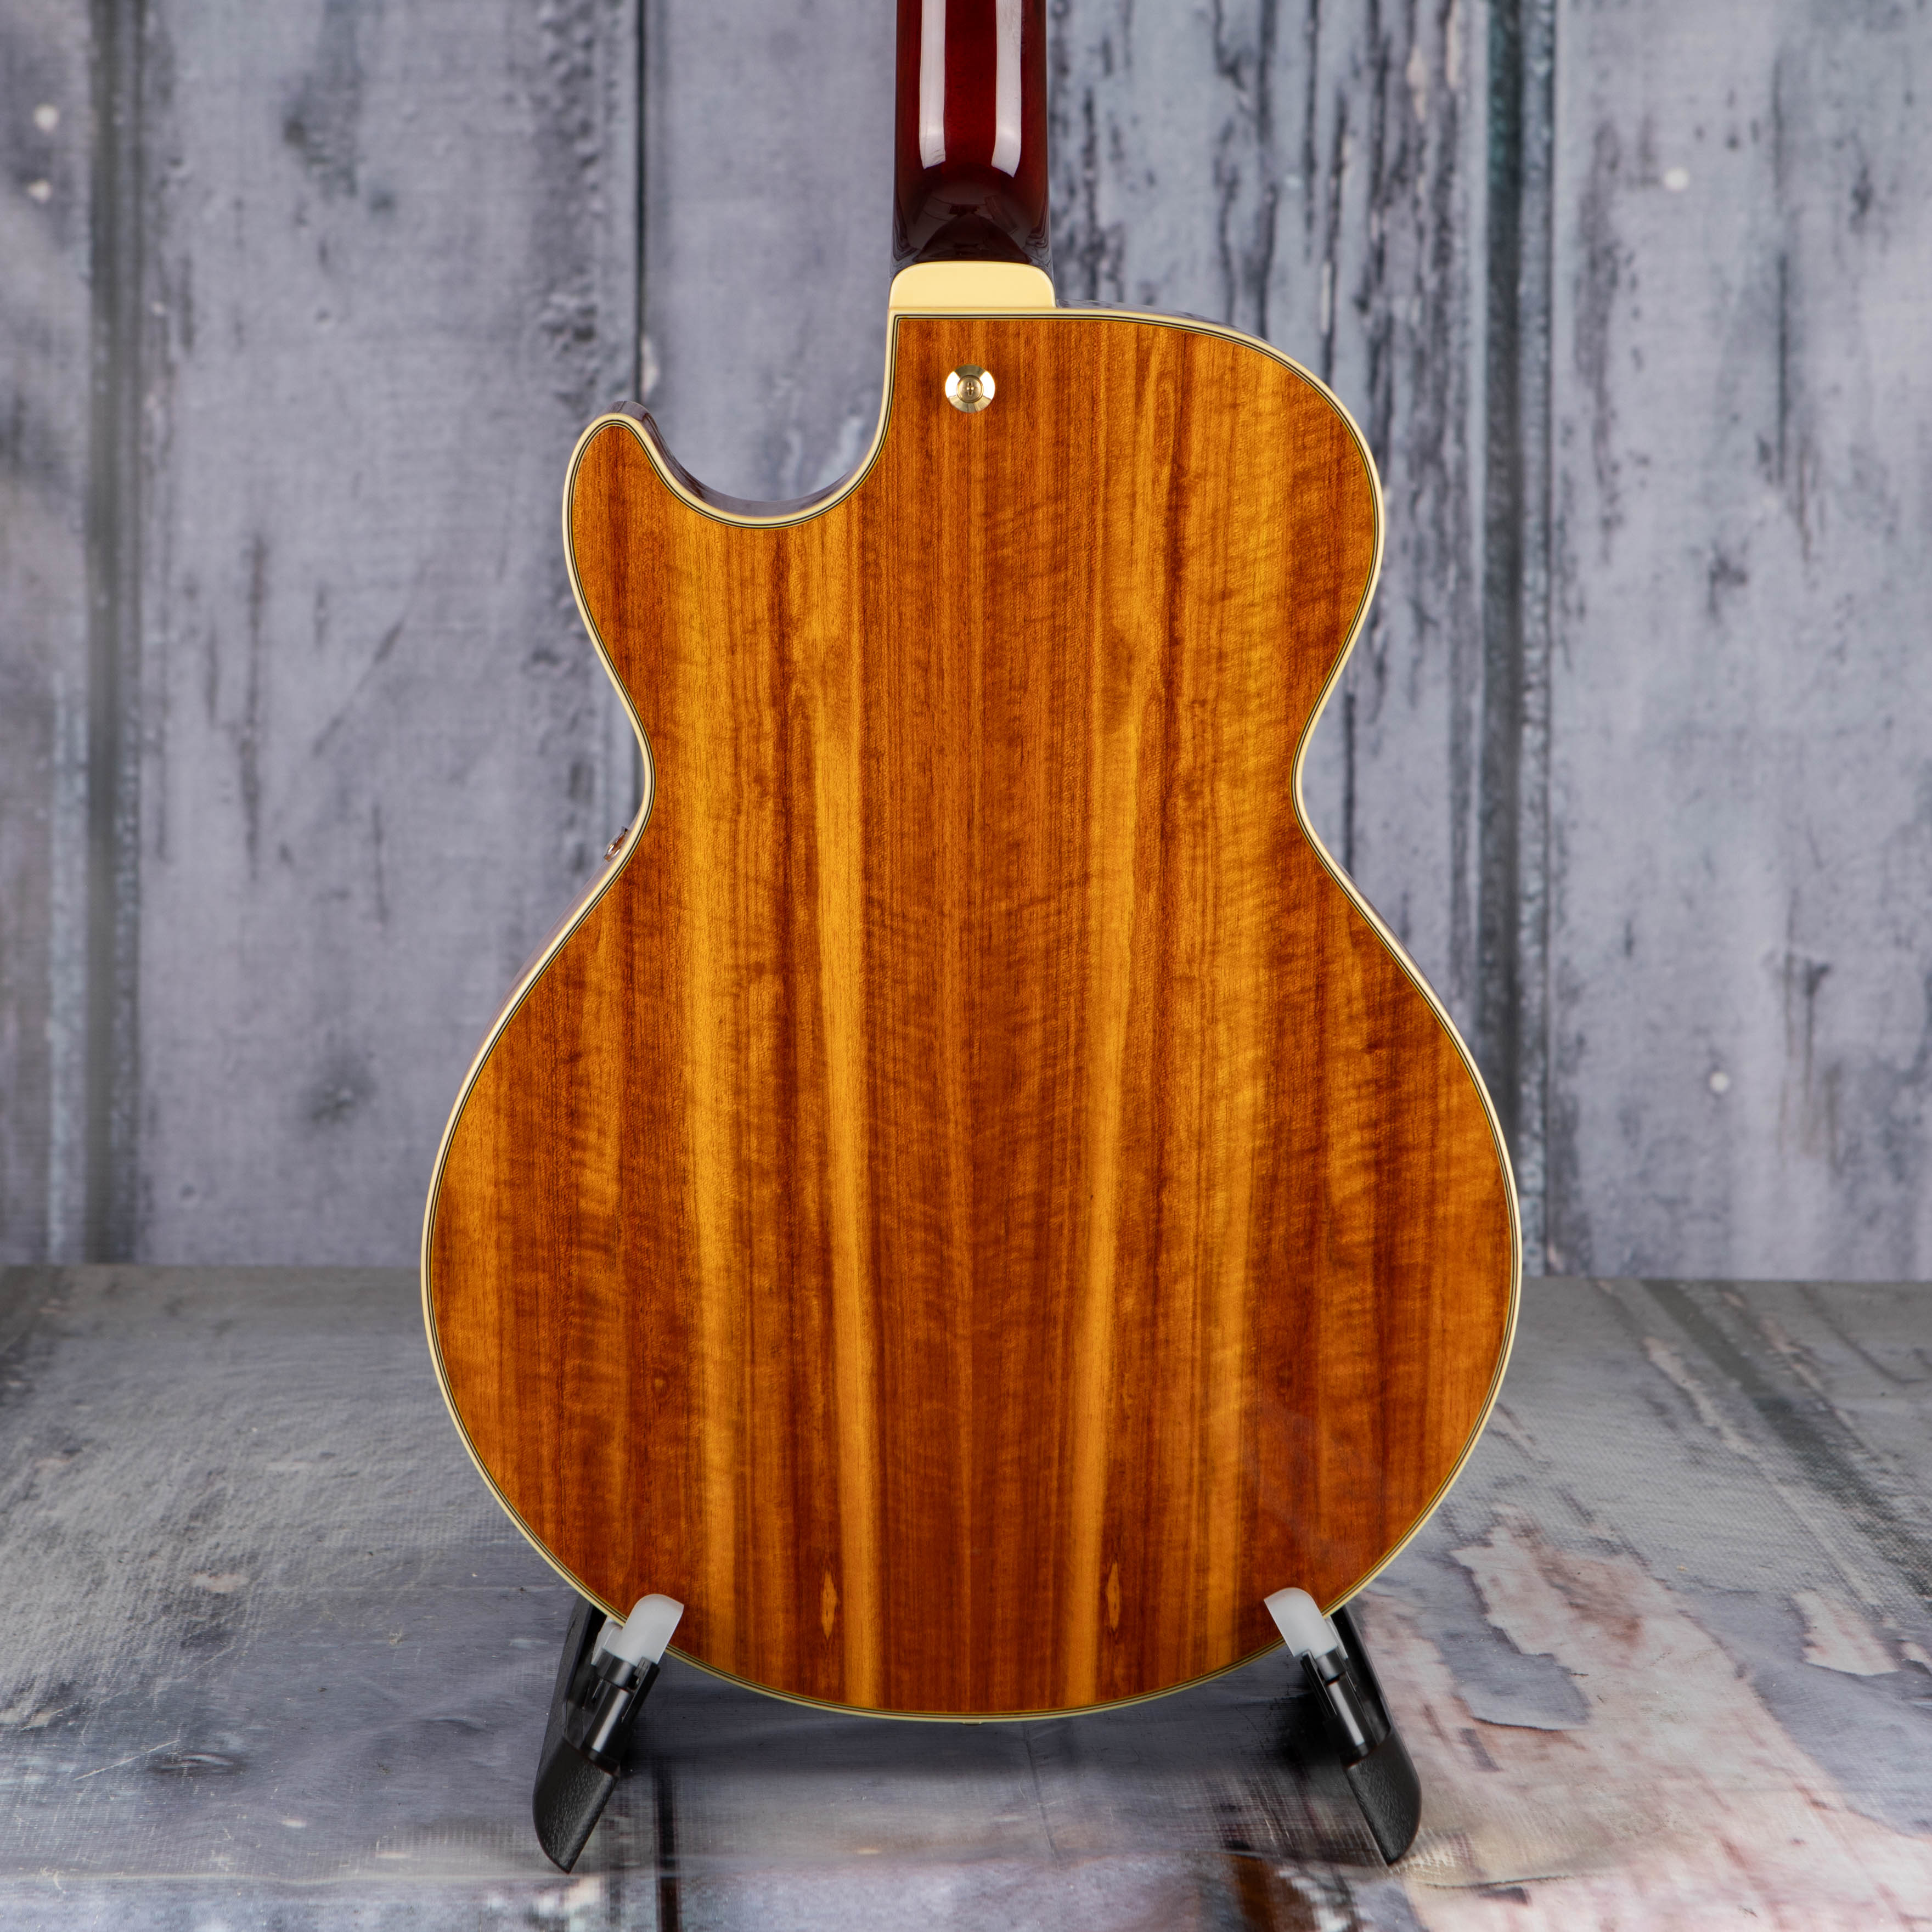 Ibanez Artcore Expressionist AG95K Hollowbody Guitar, Natural, back closeup